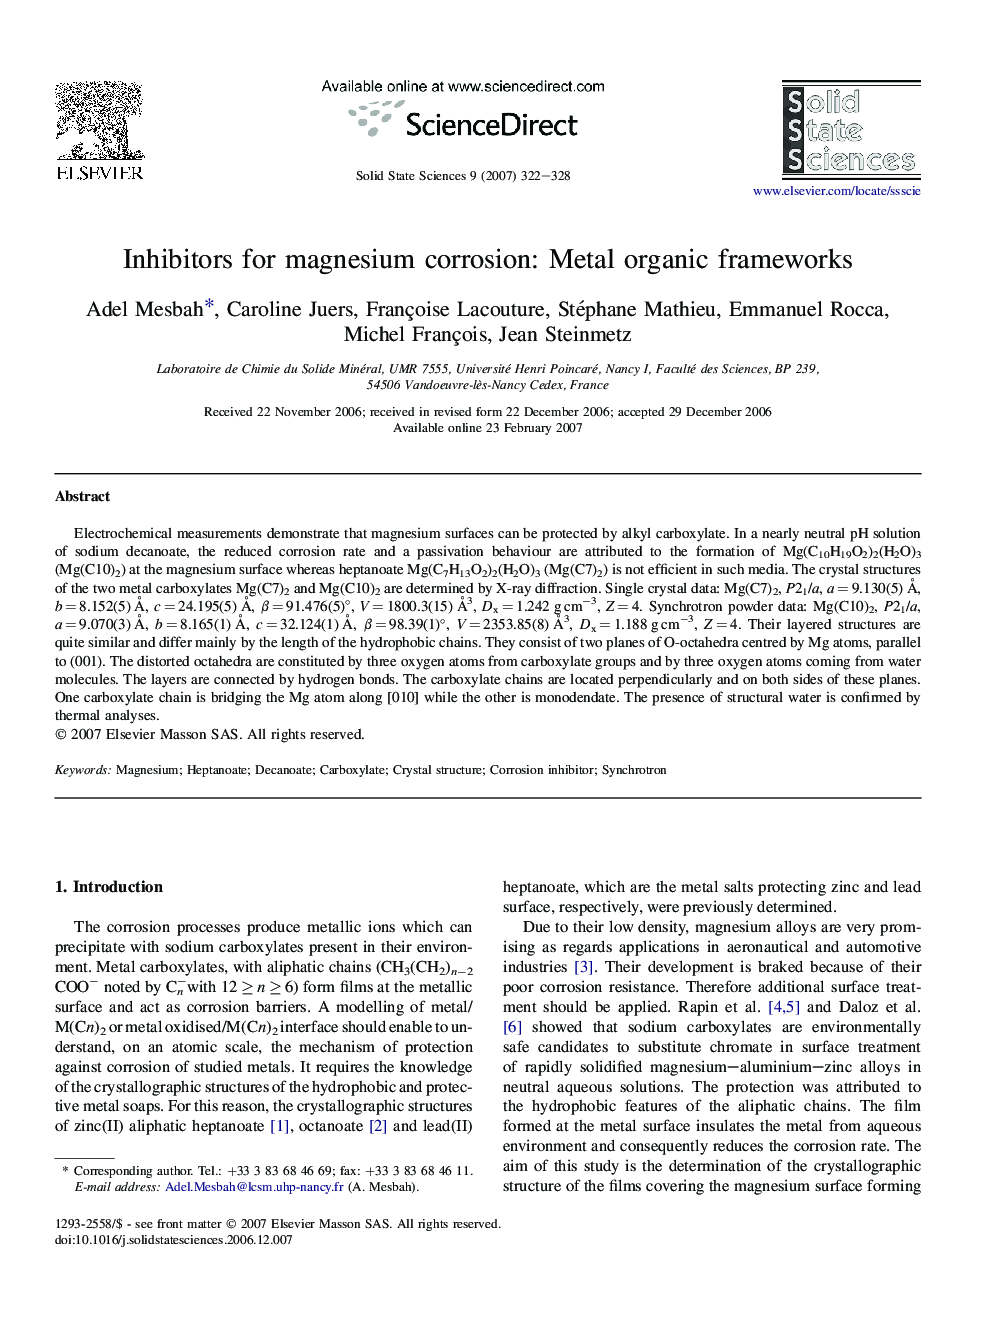 Inhibitors for magnesium corrosion: Metal organic frameworks